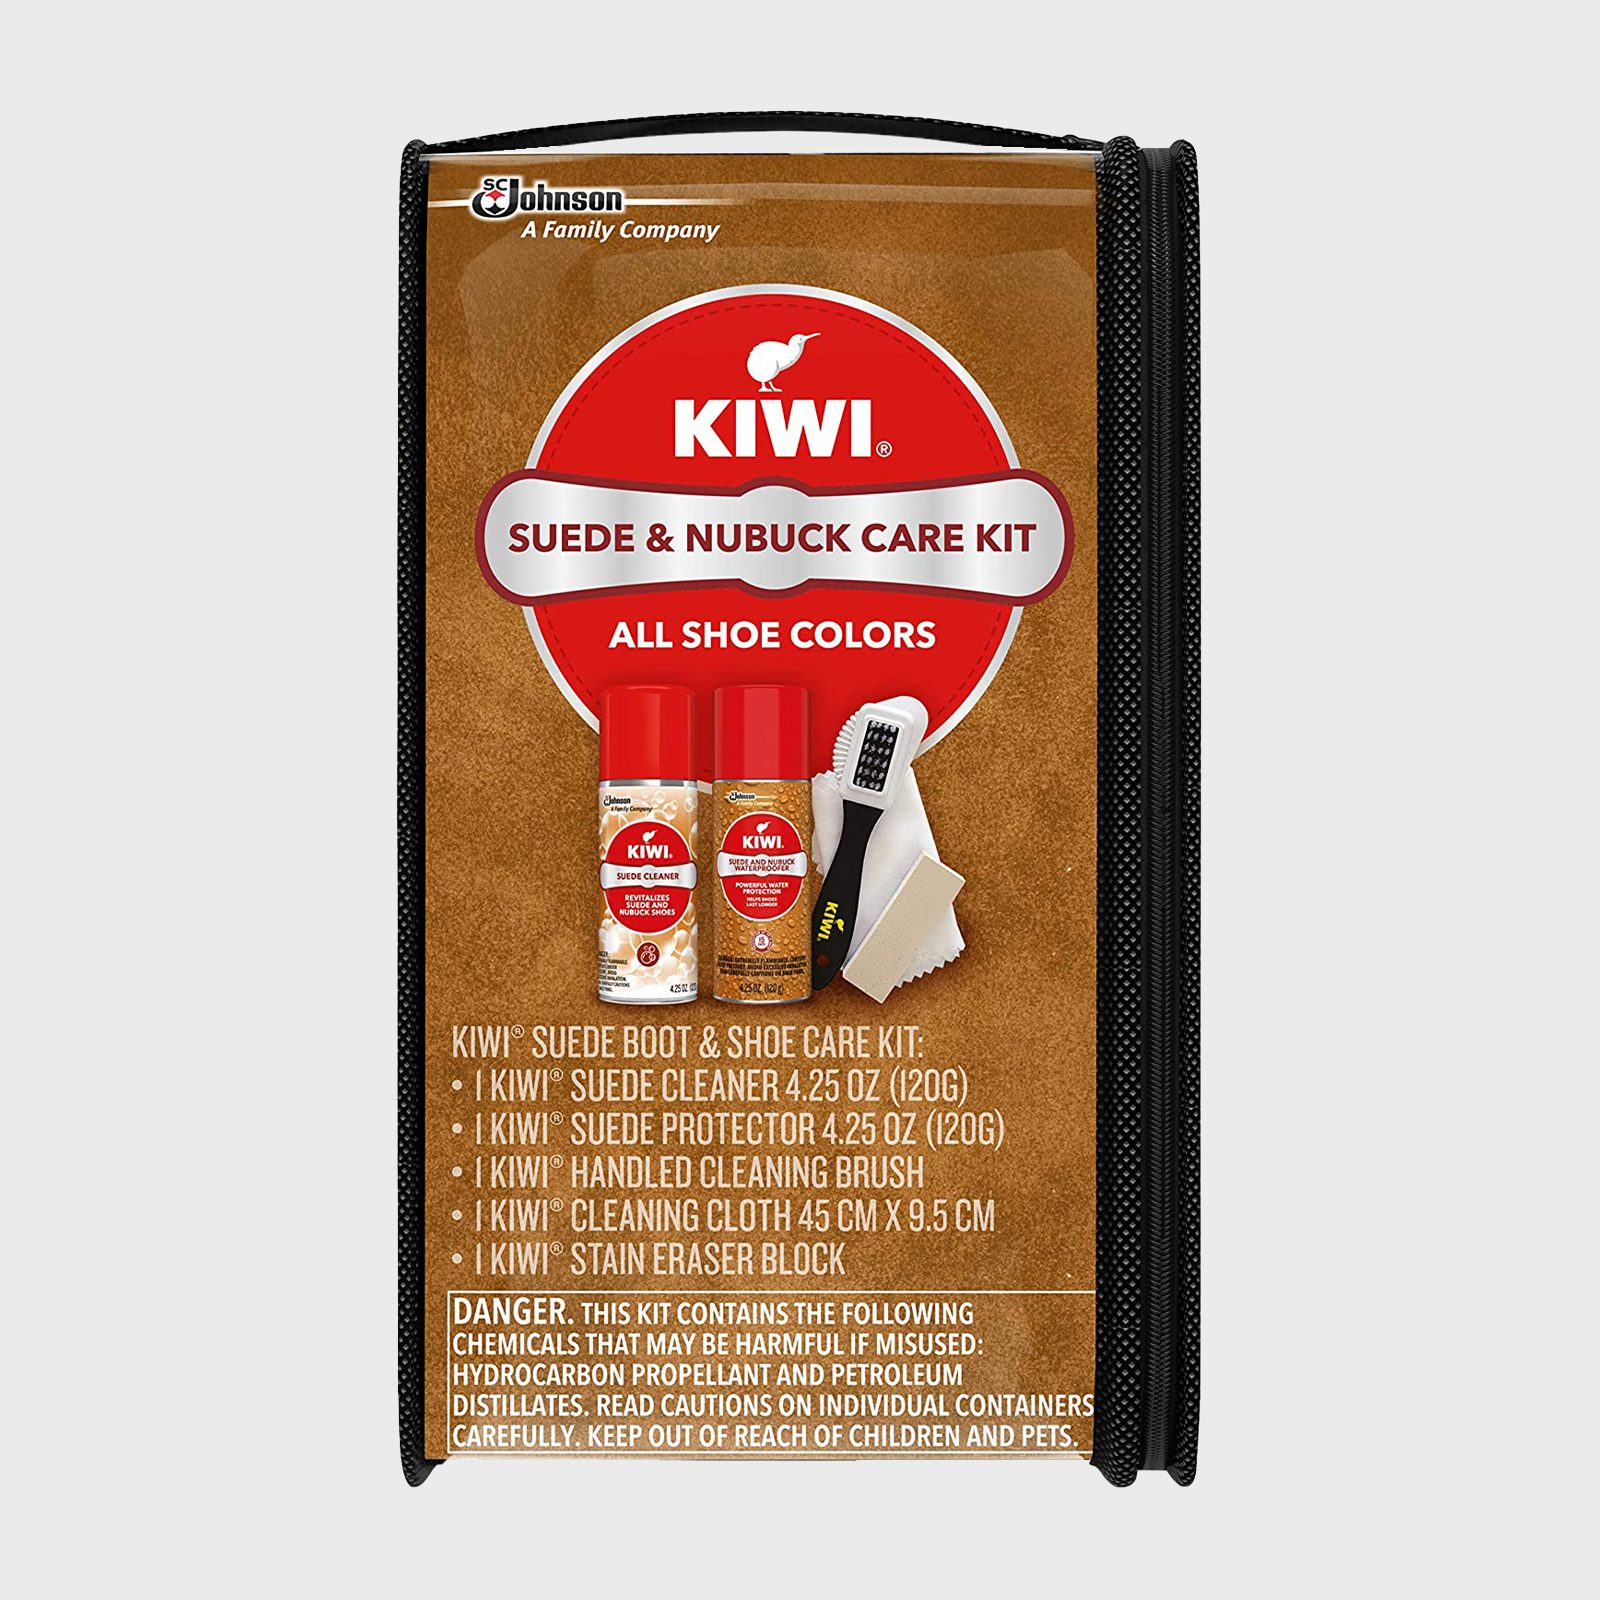 Kiwi Suede And Nubuck Care Kit Ecomm Via Amazon